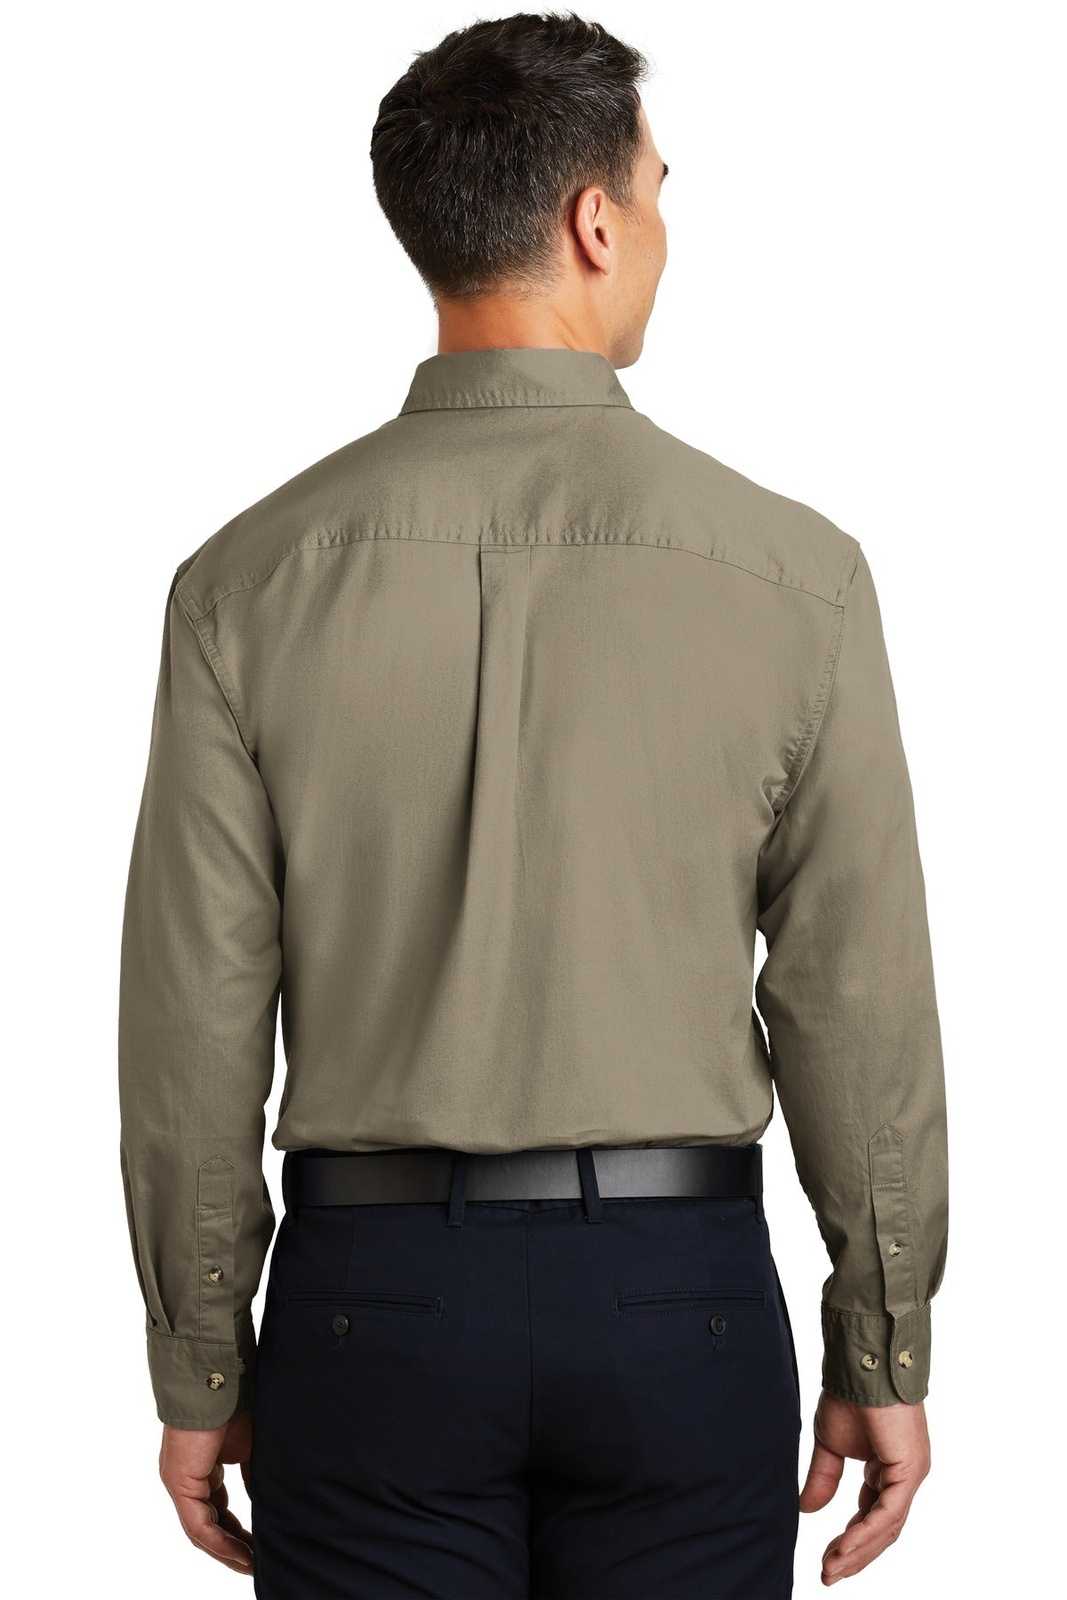 Port Authority S600T Long Sleeve Twill Shirt - Khaki - HIT a Double - 1